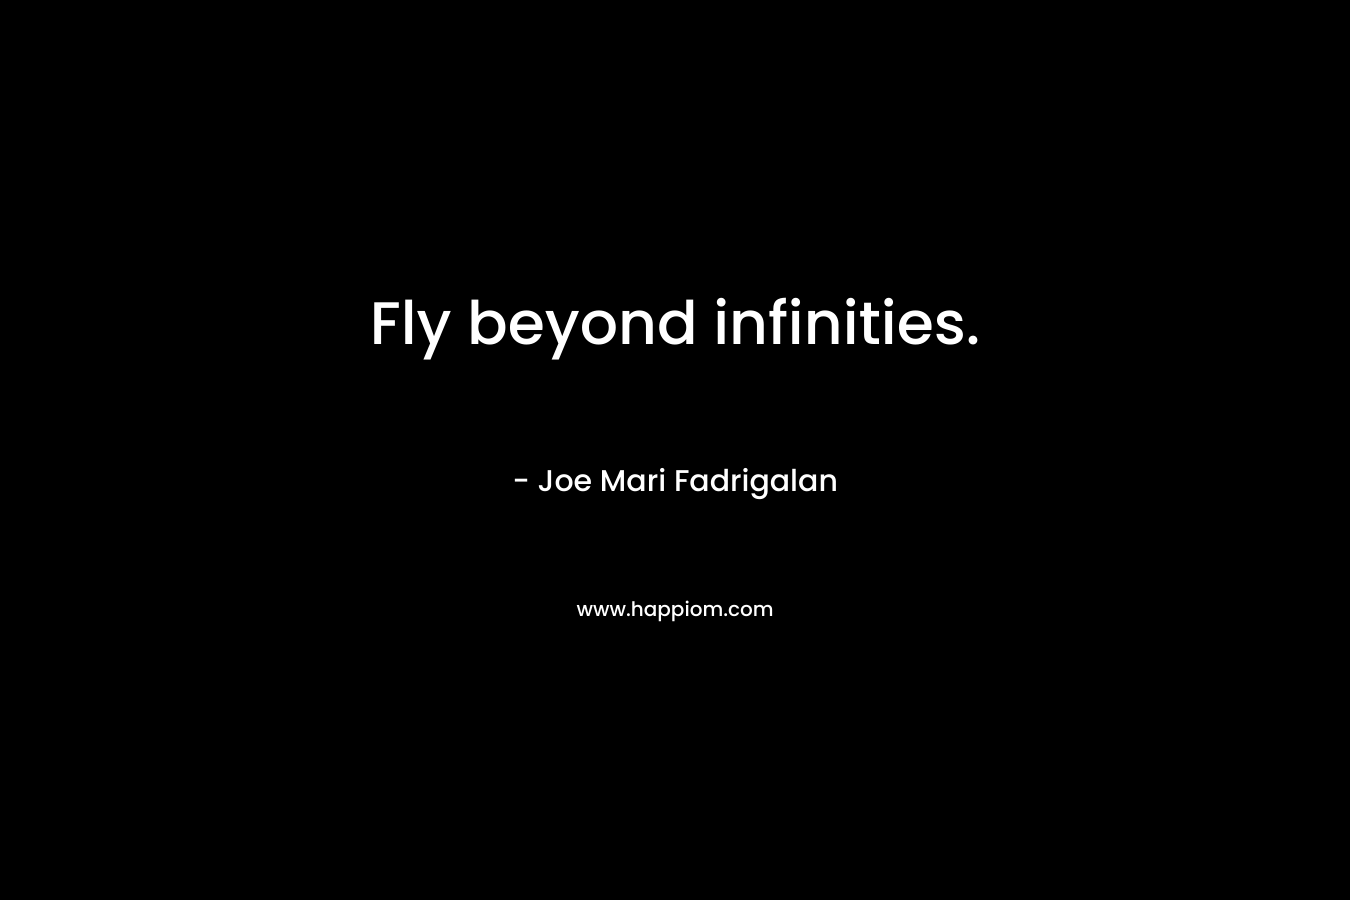 Fly beyond infinities.